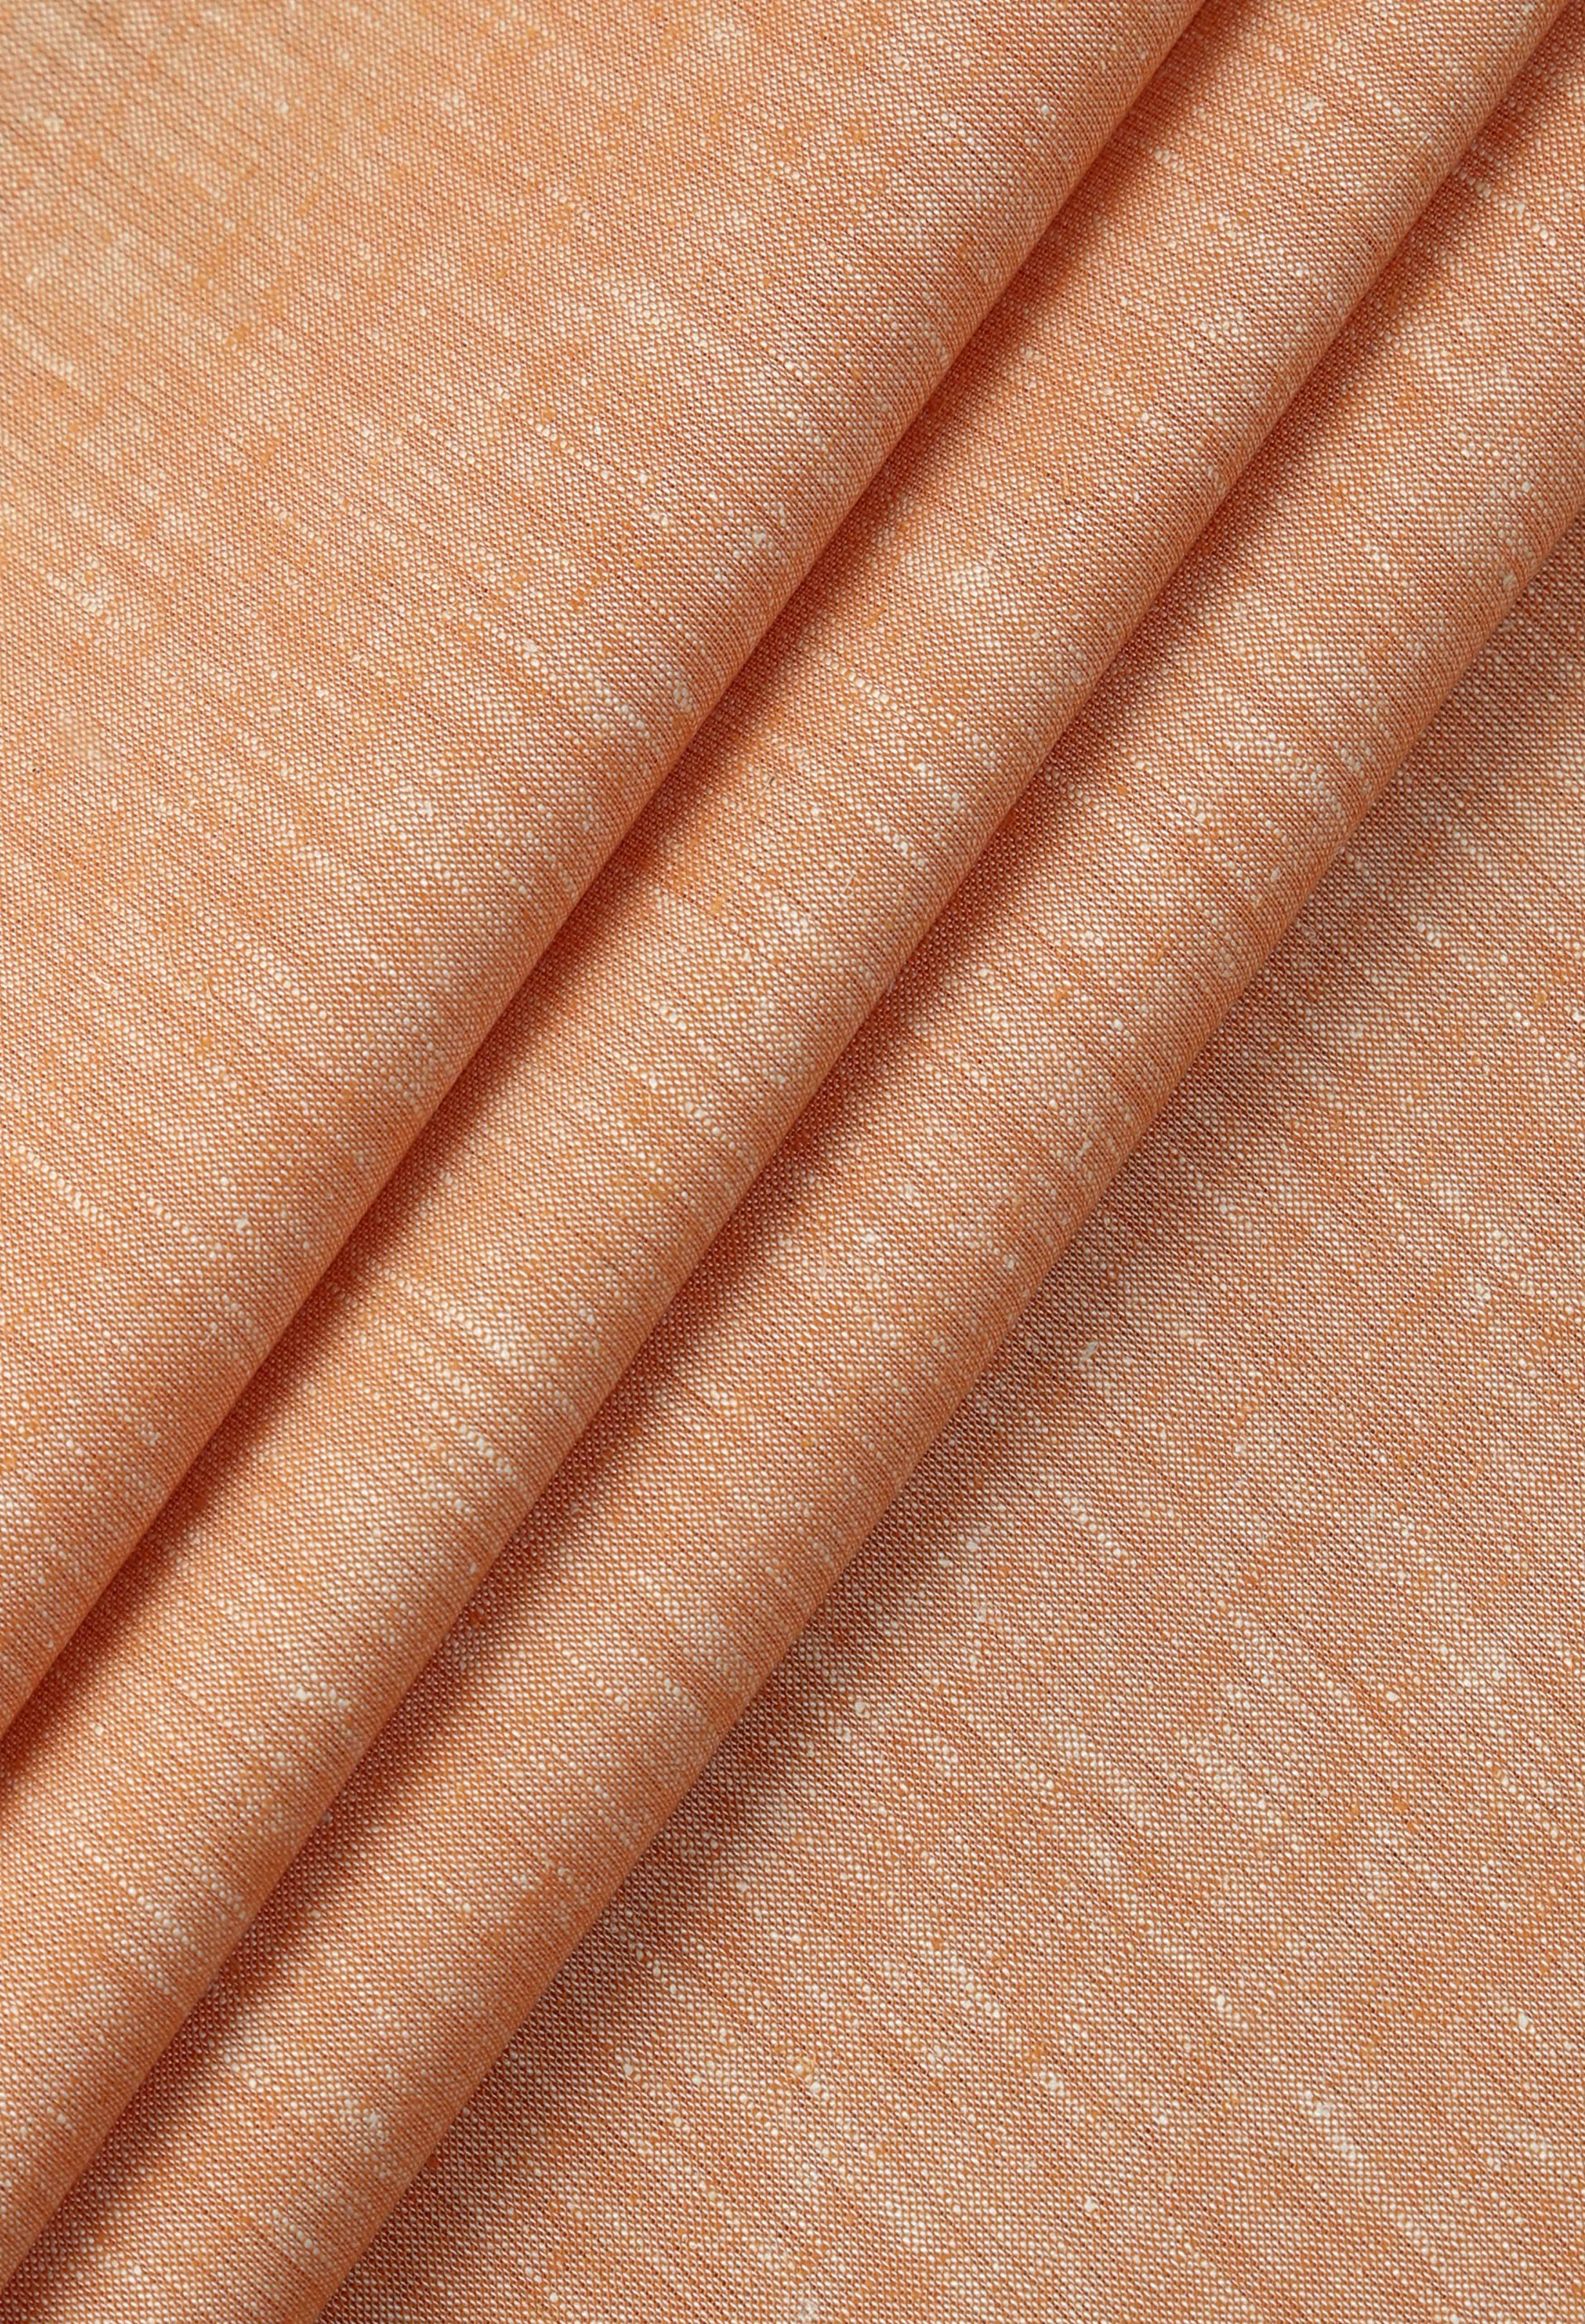 Creamy Peach Linen